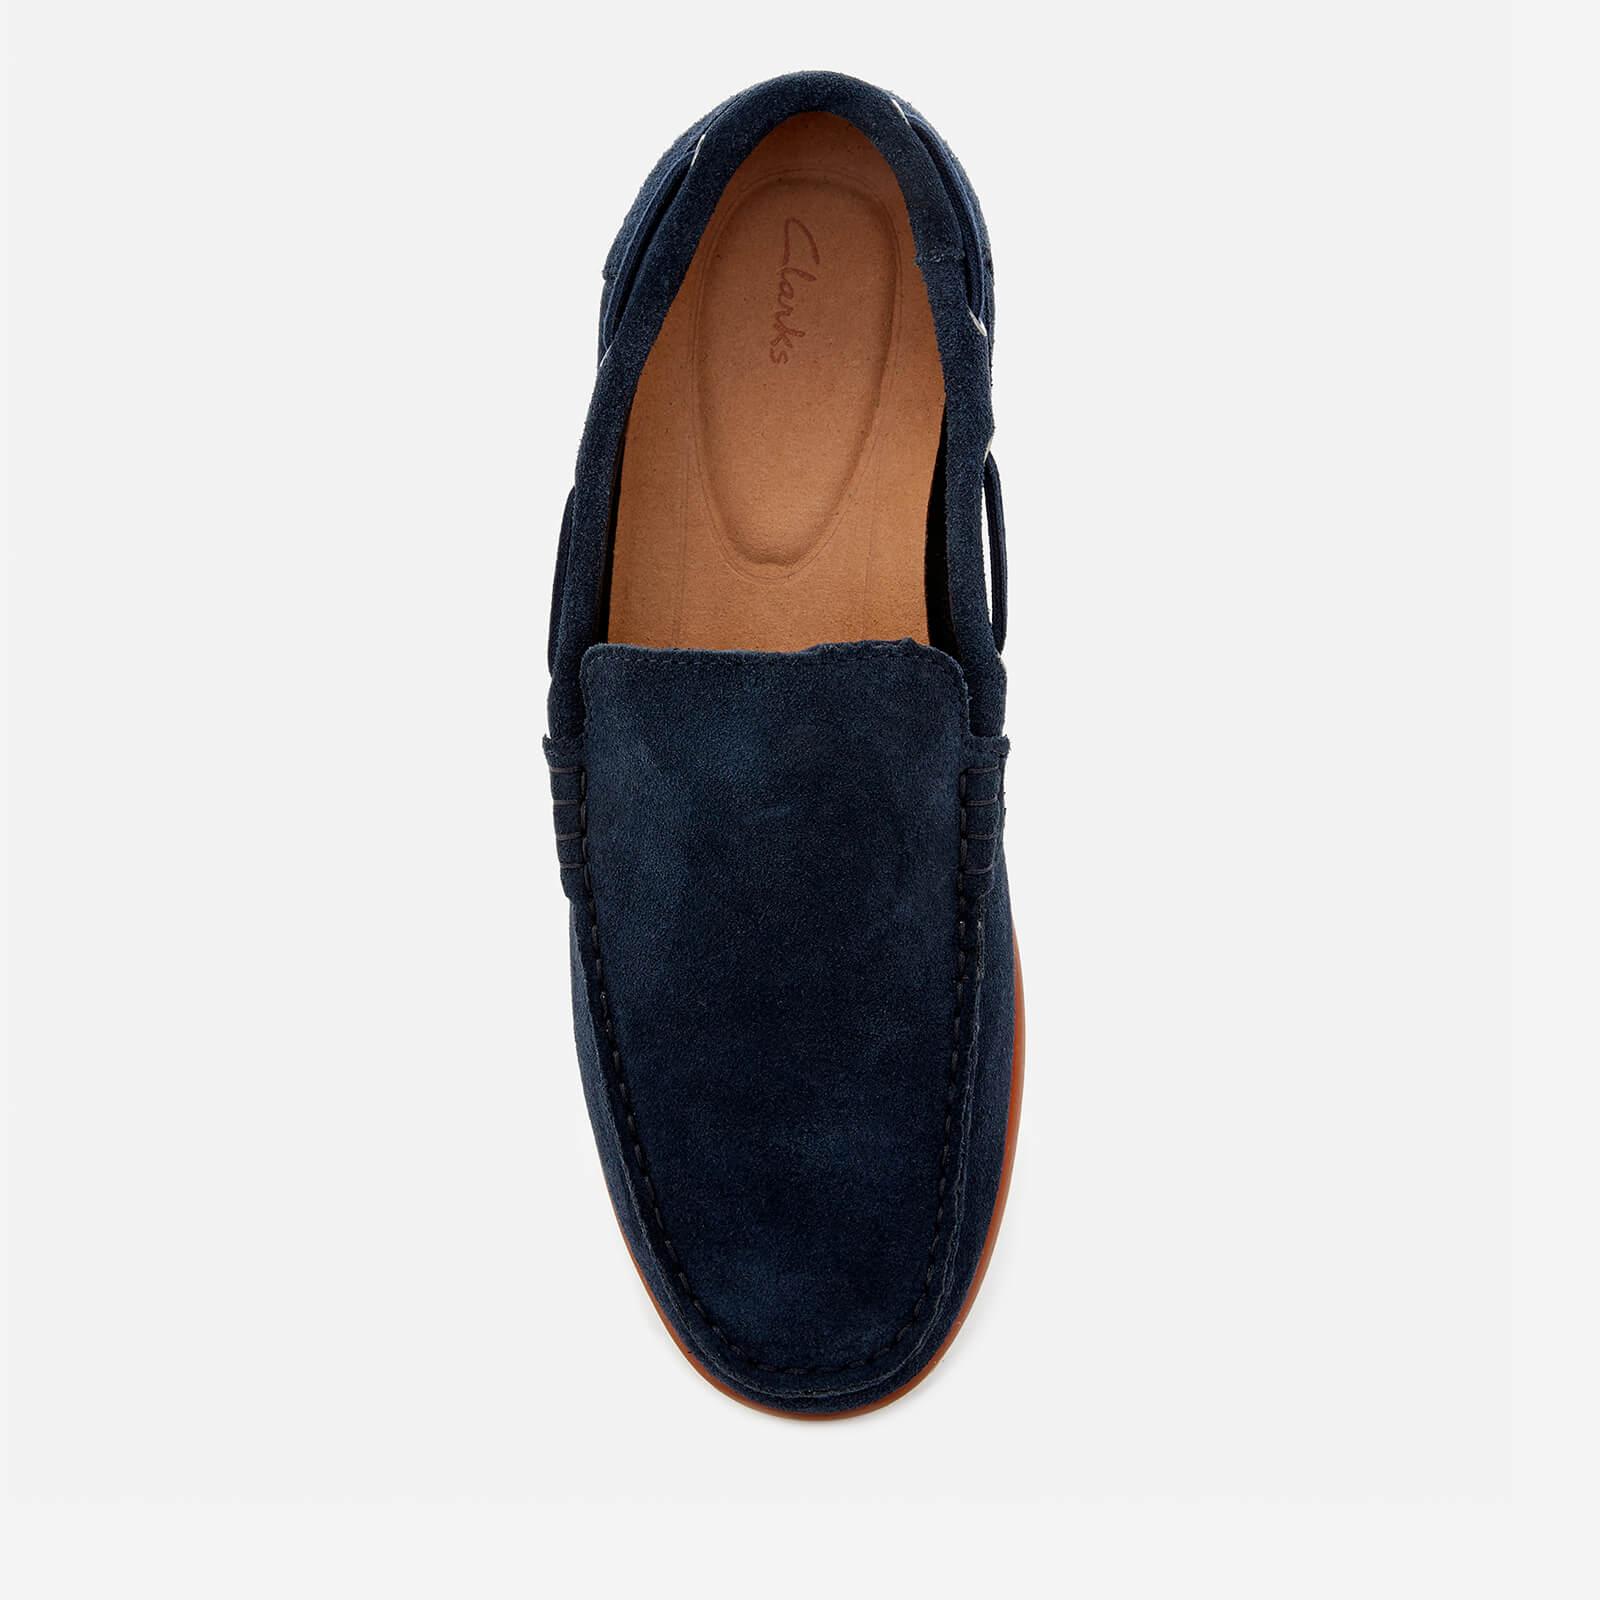 Clarks Morven Sun Suede Slip-on Boat Shoes in Navy (Blue) for Men - Lyst